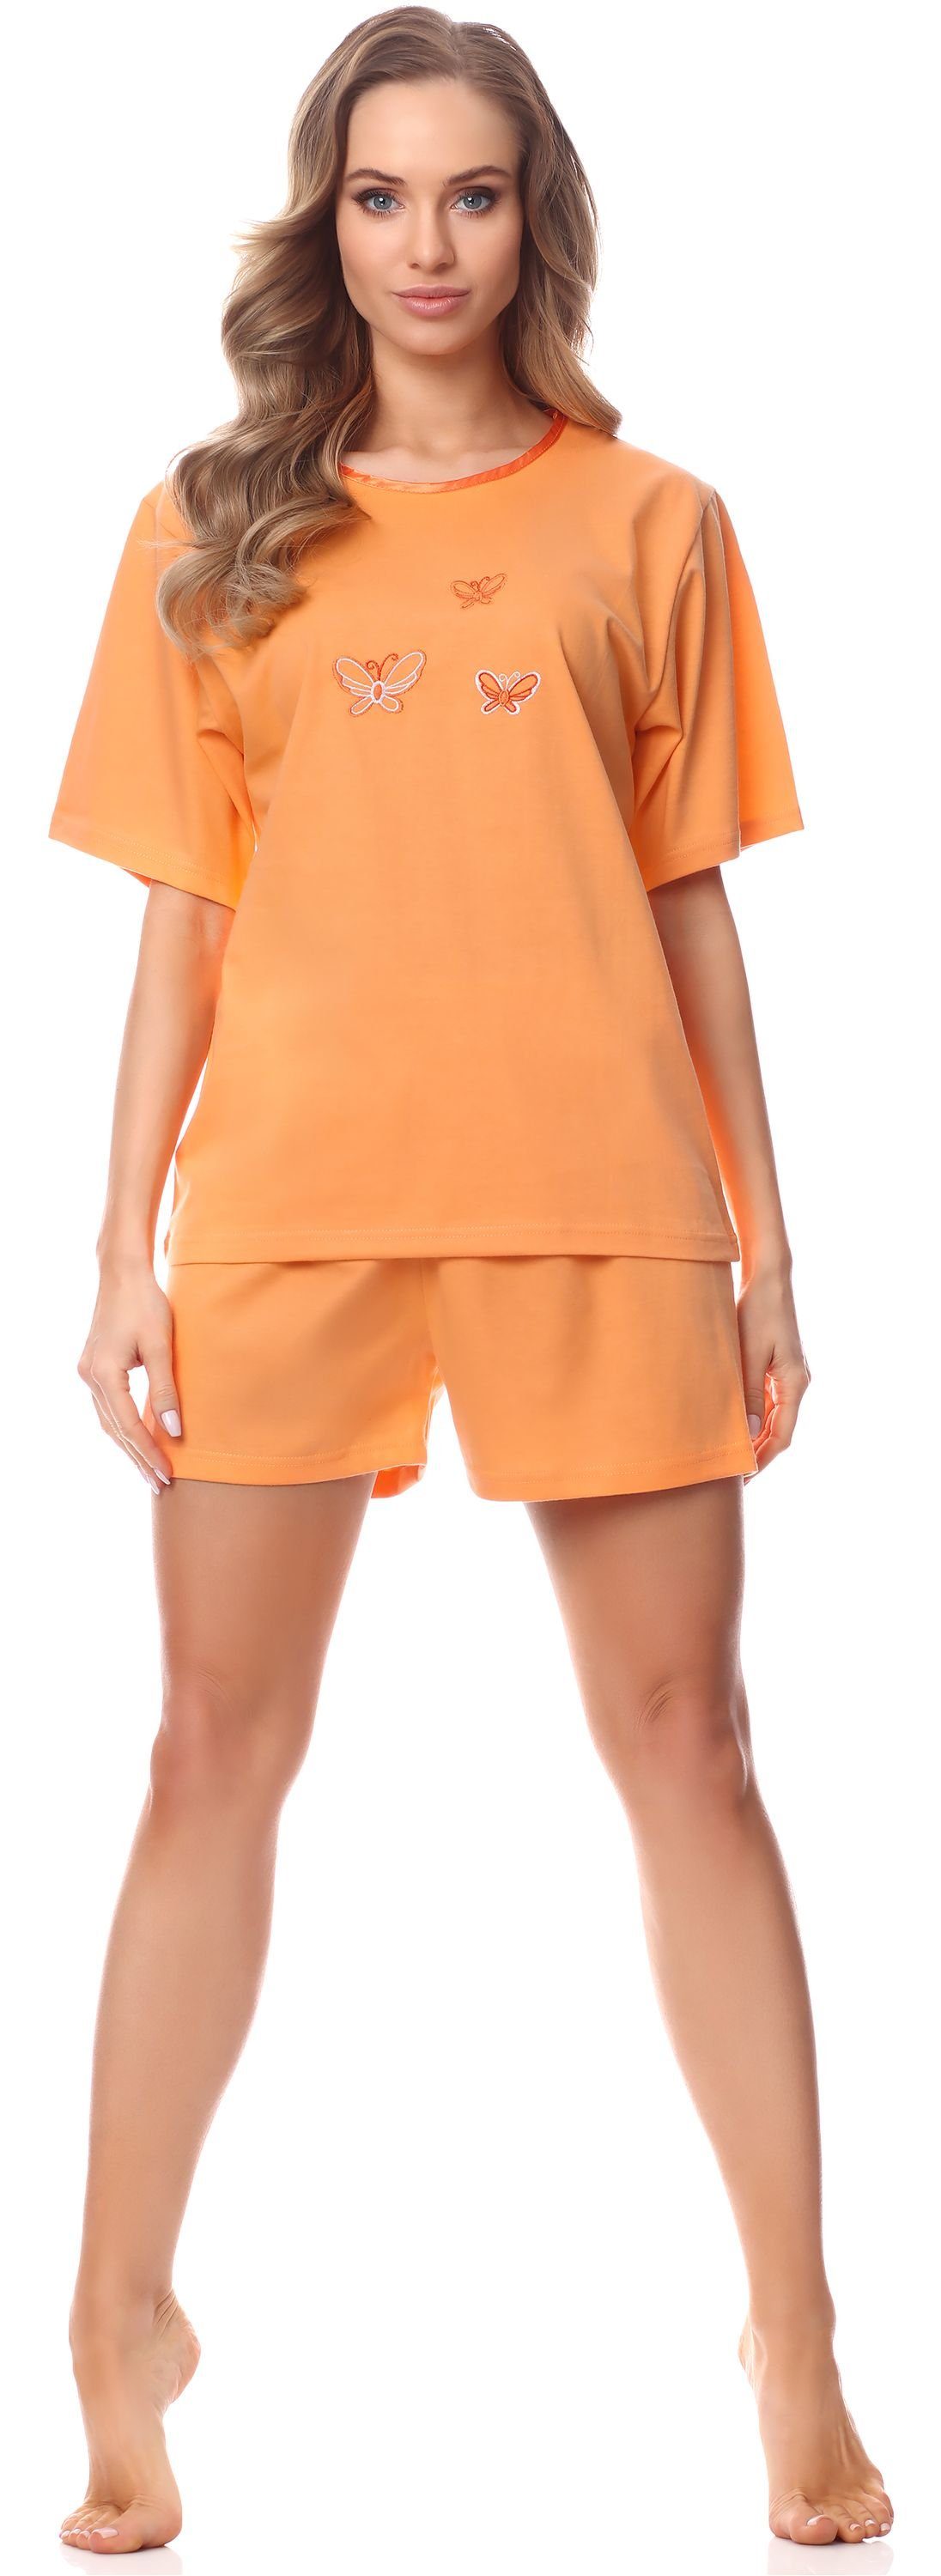 Merry Style Schlafanzug 91LW1 Damen (Kurzarm) Schlafanzug Kurzarm Orange